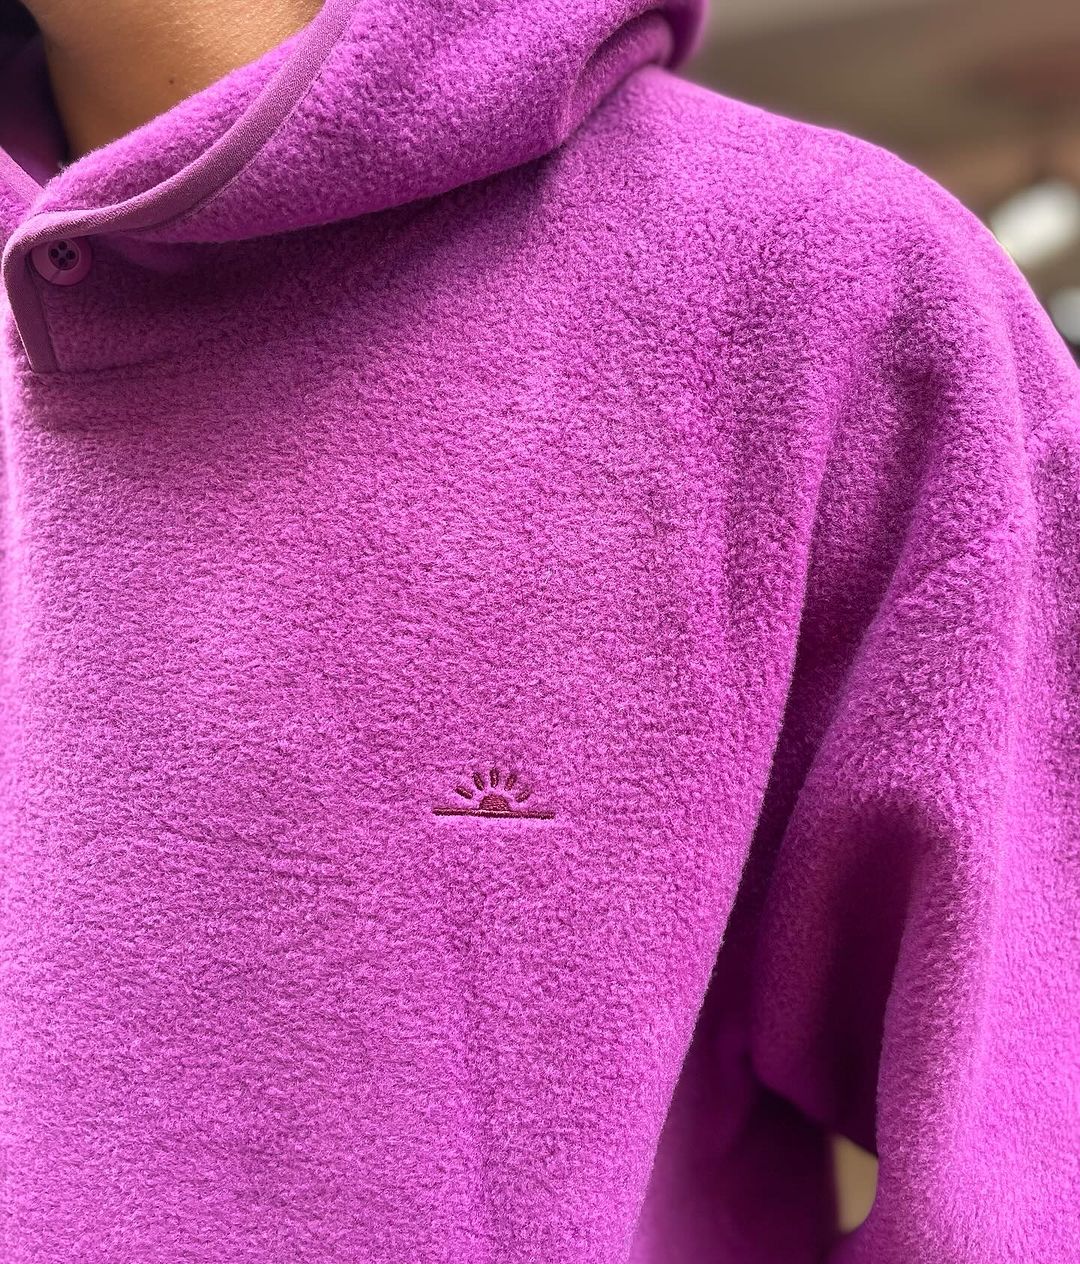 Sunrise fleece snap hoodie purple @itshop_caen